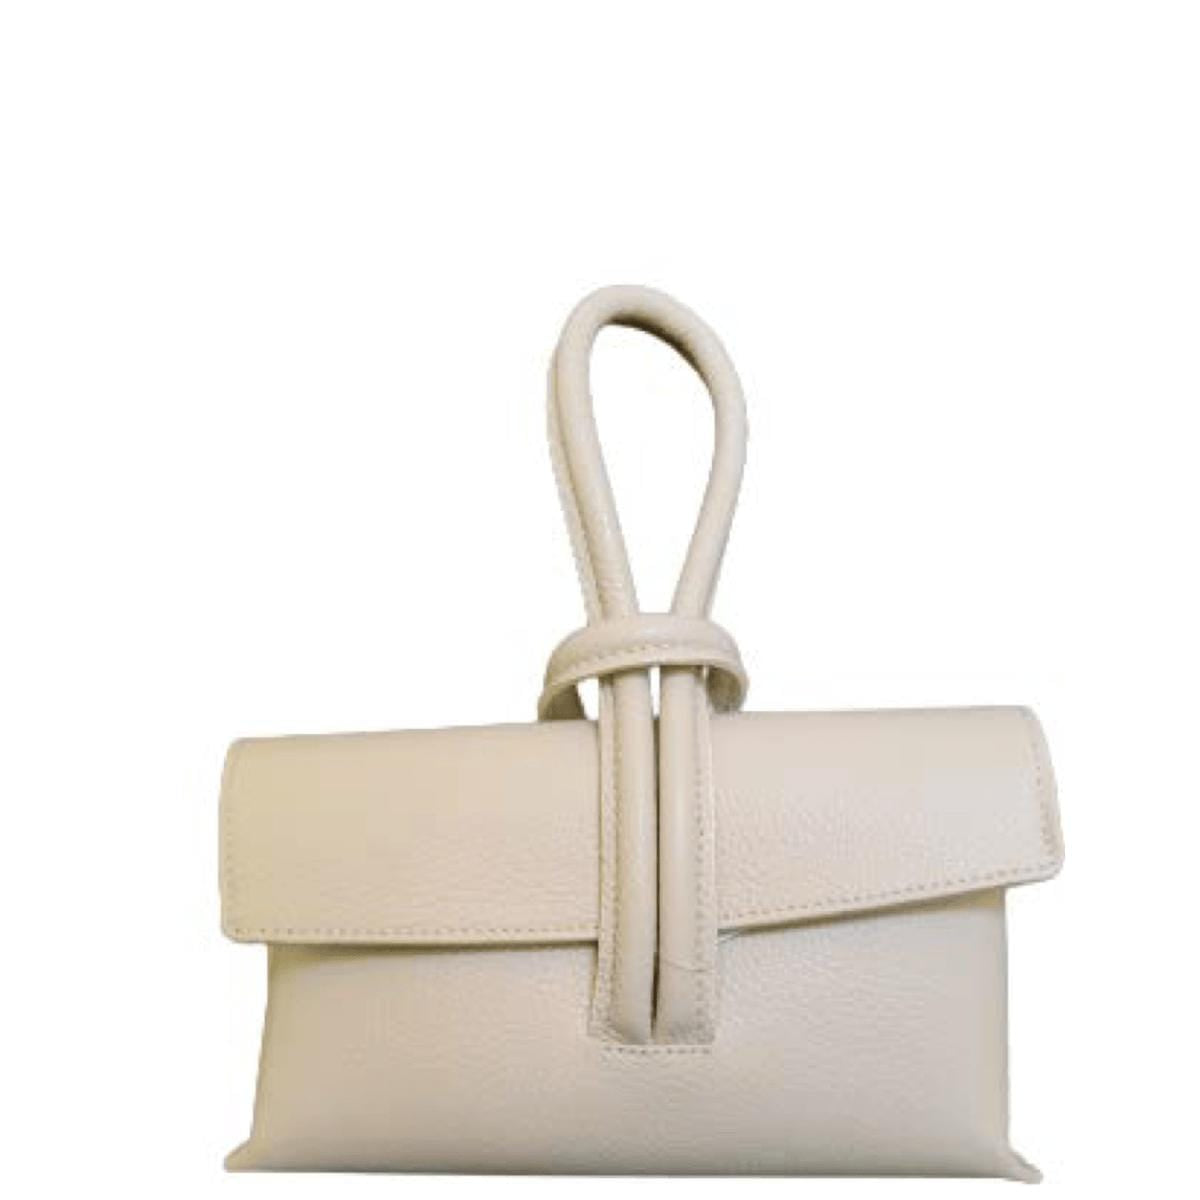 HHB Handbags Beige Nina Italian Leather Small Wrist Bag